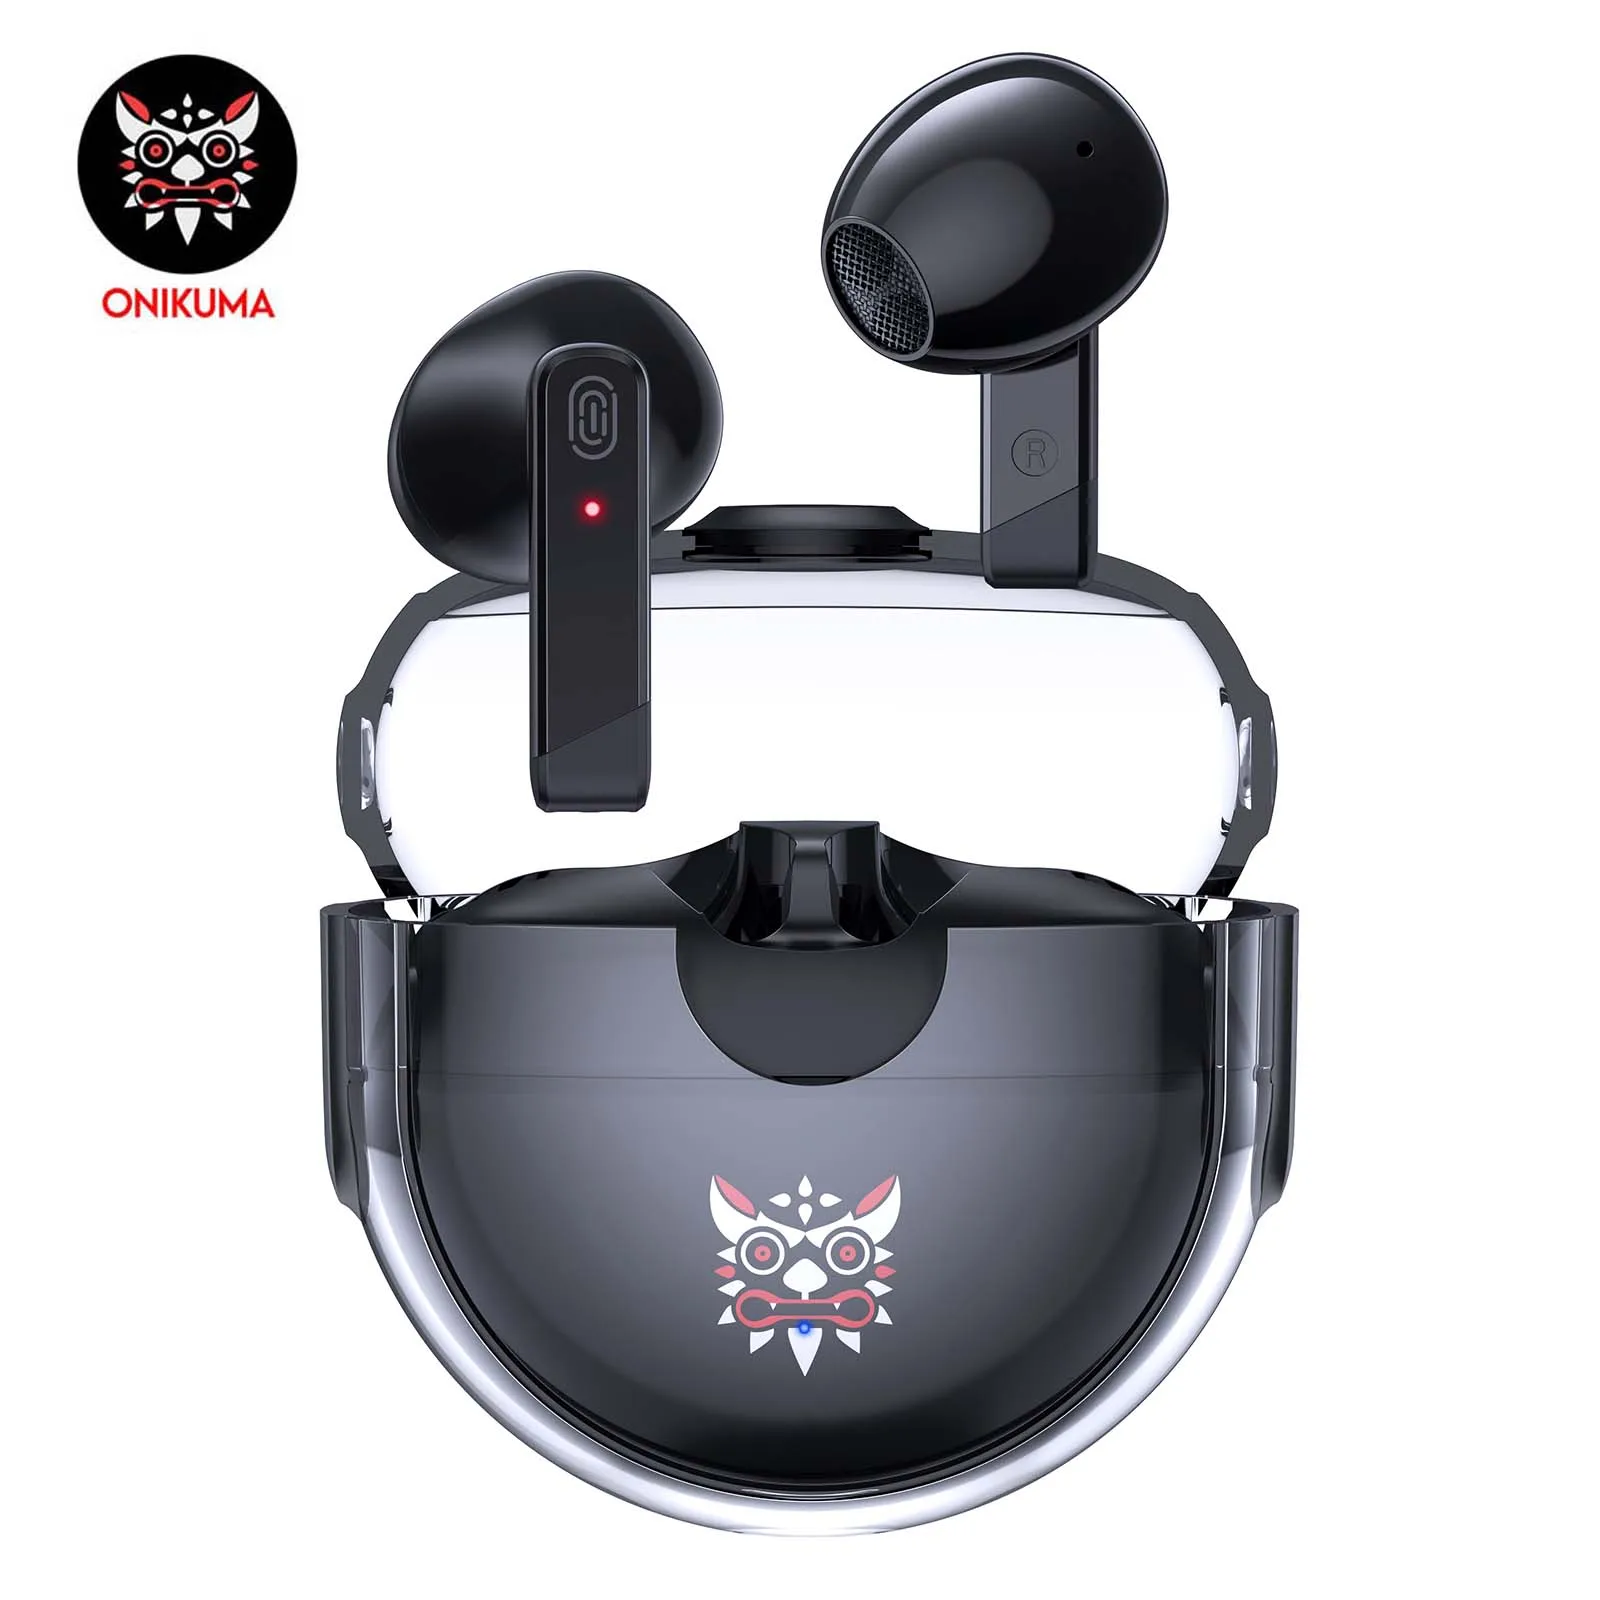 

ONIKUMA TWS Earphone Bluetooth Gaming Headphone Wireless Earbud Low Latency Waterproof Sport Headsets Noise Reduction with Mic